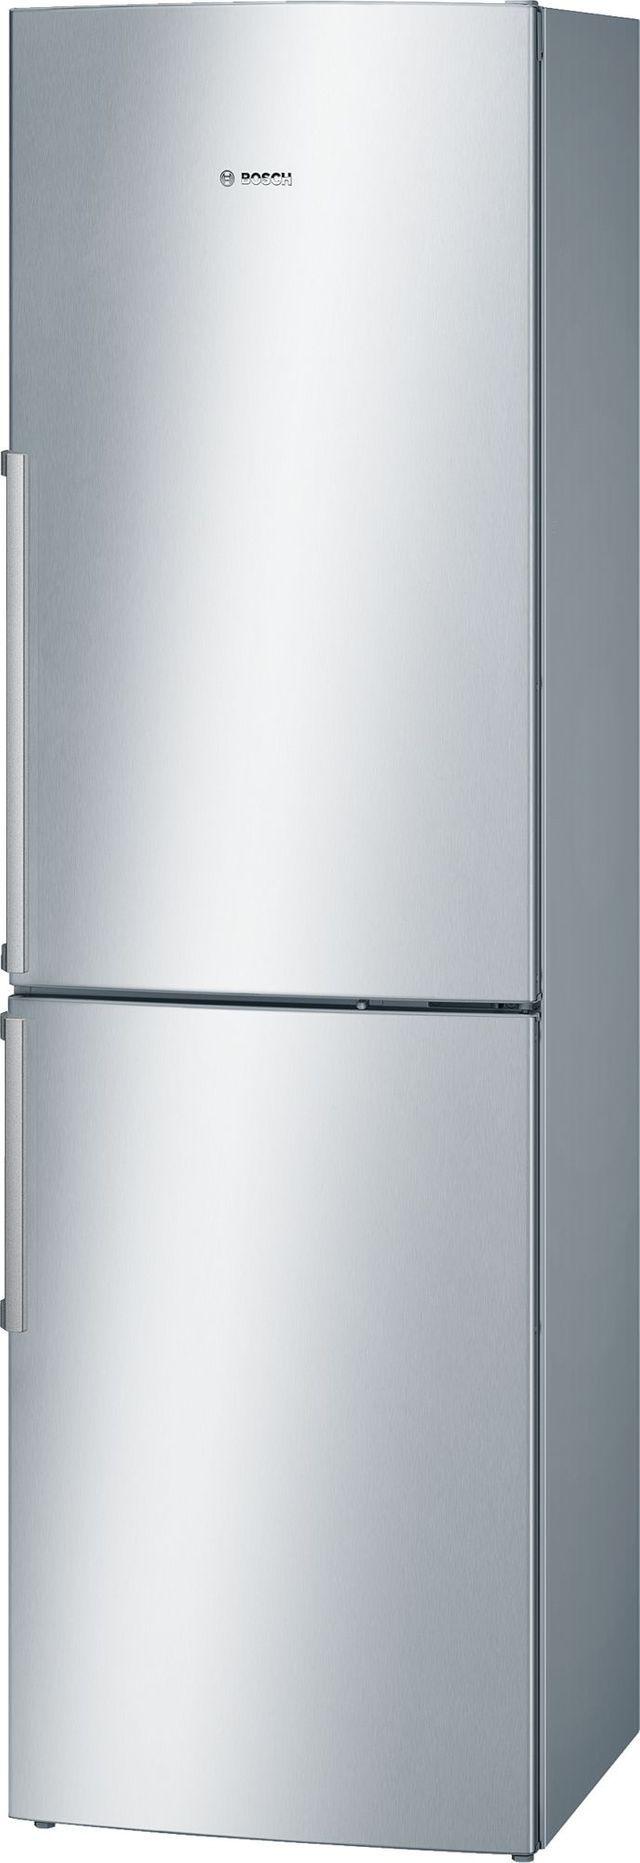 Bosch 800 Series 11.0 Cu. Ft. Stainless Steel Counter-Depth Bottom Freezer Refrigerator 3